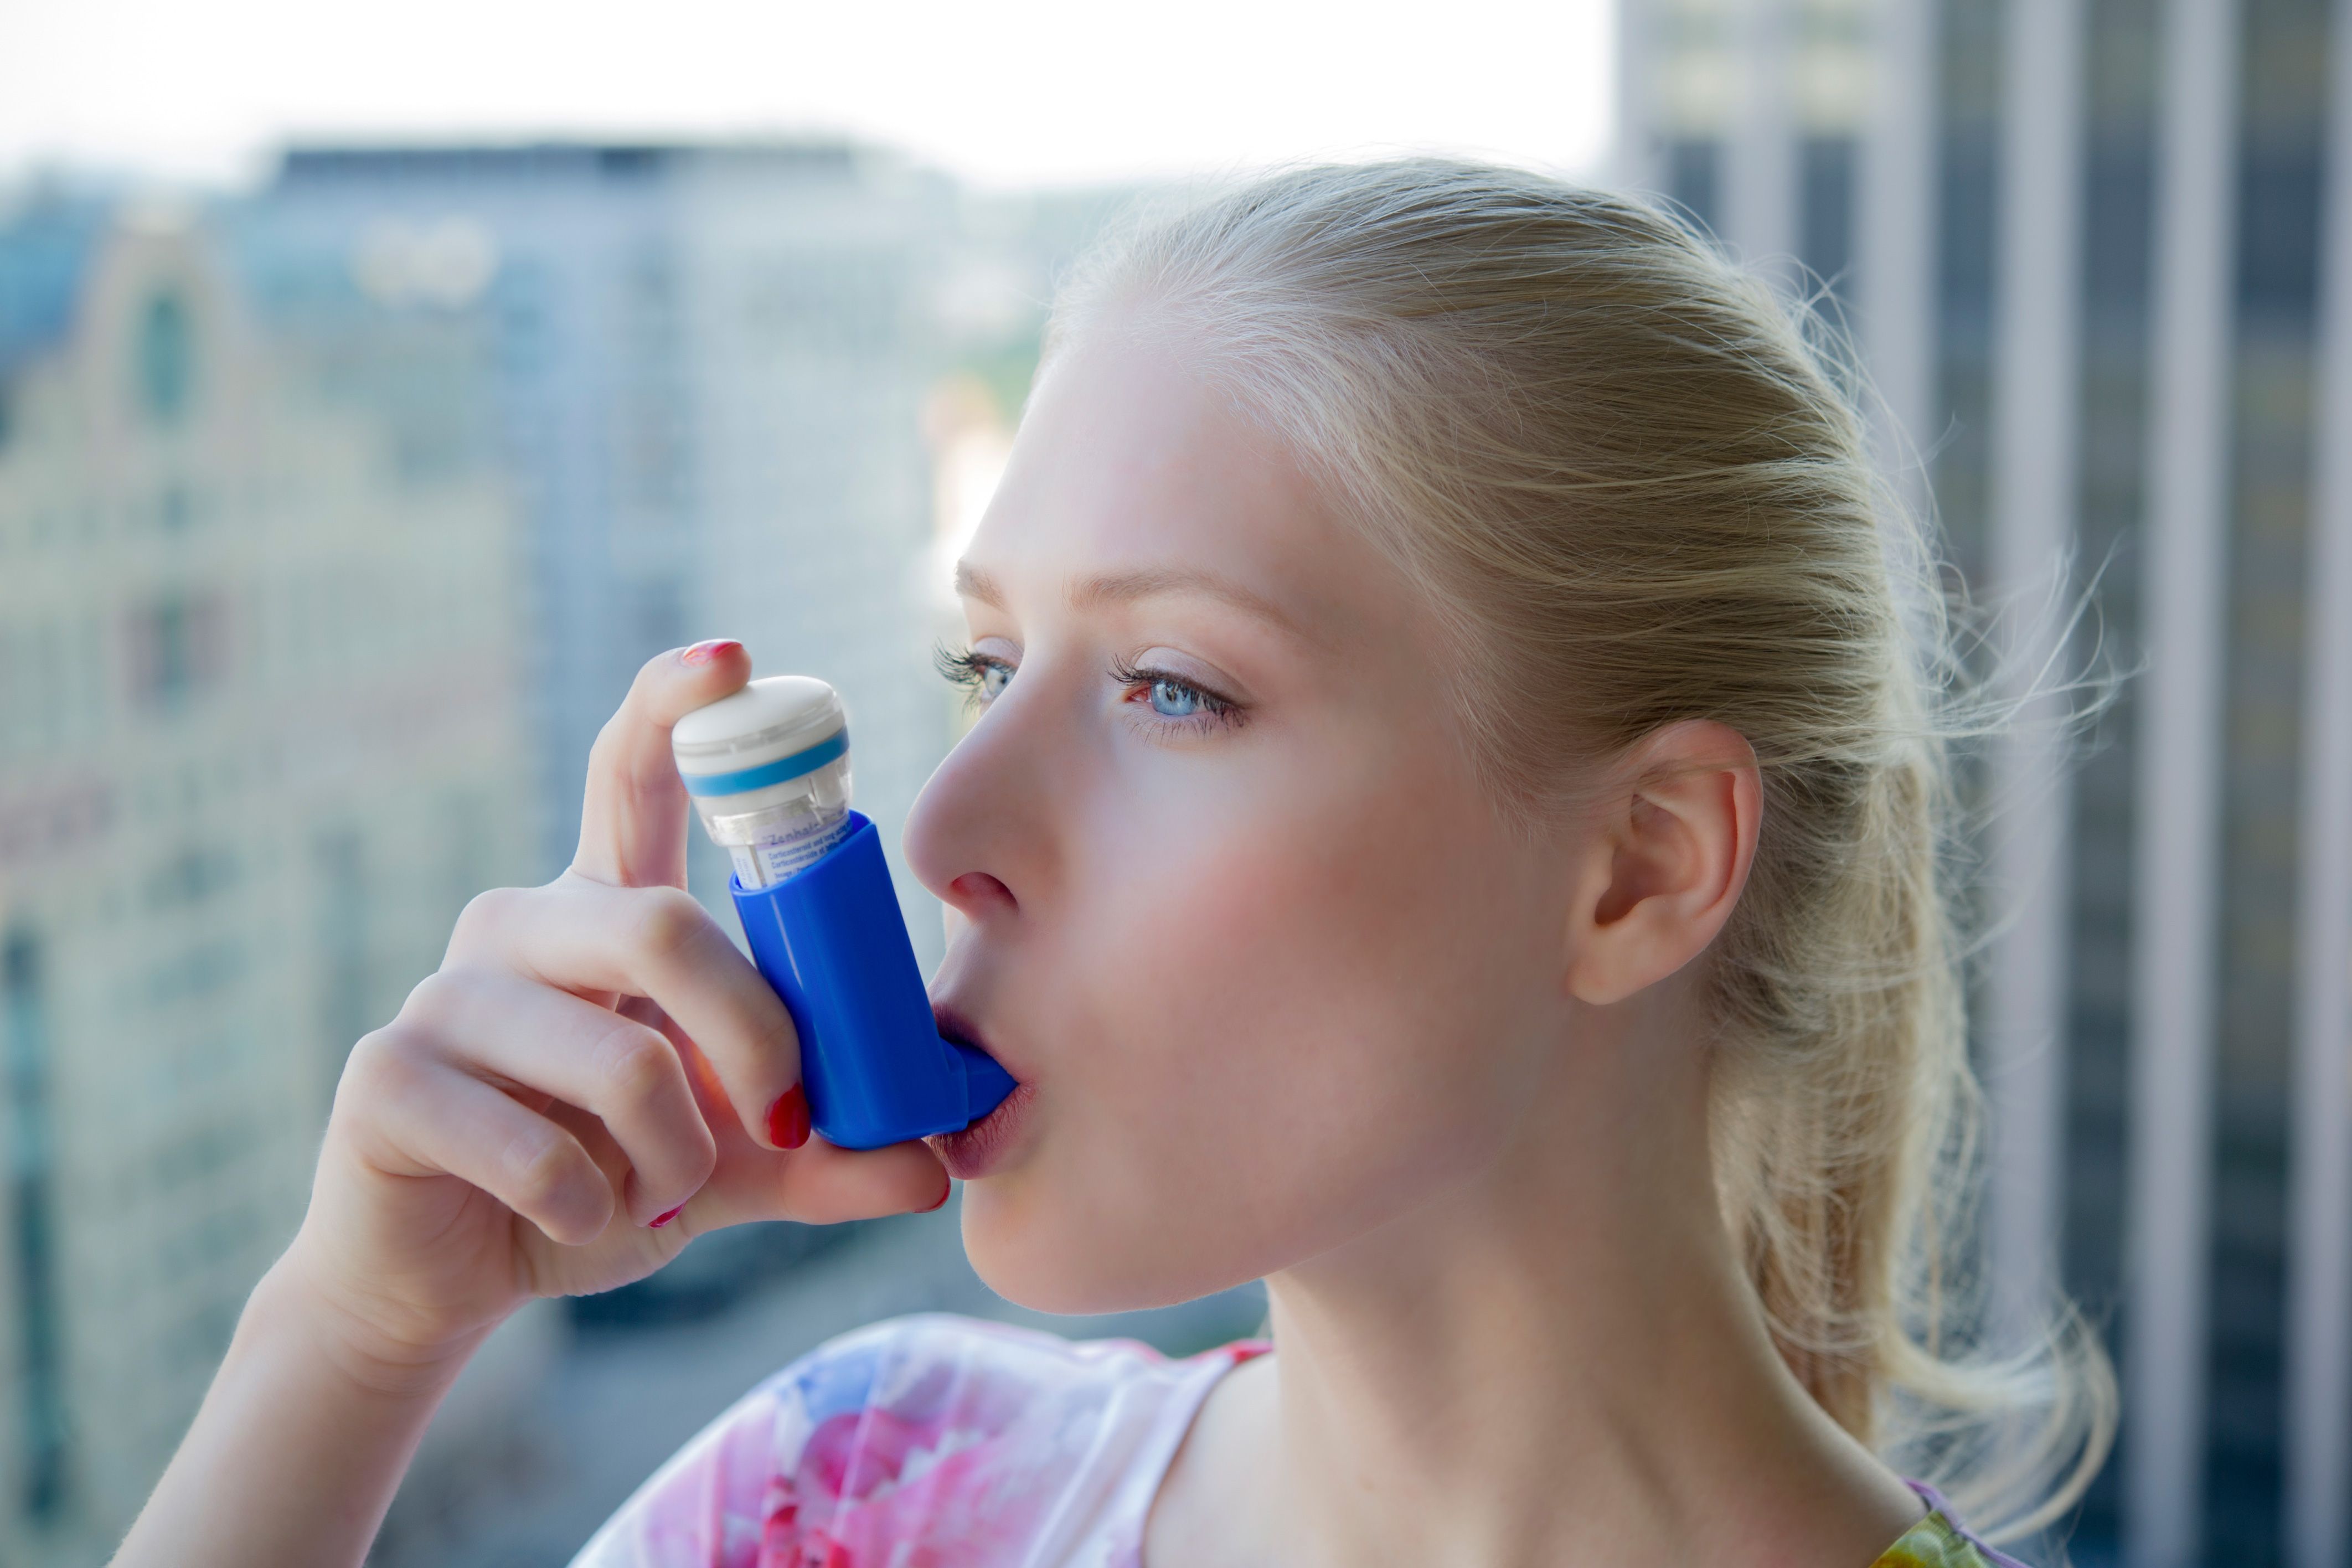 rescue inhaler vs maintenance inhaler